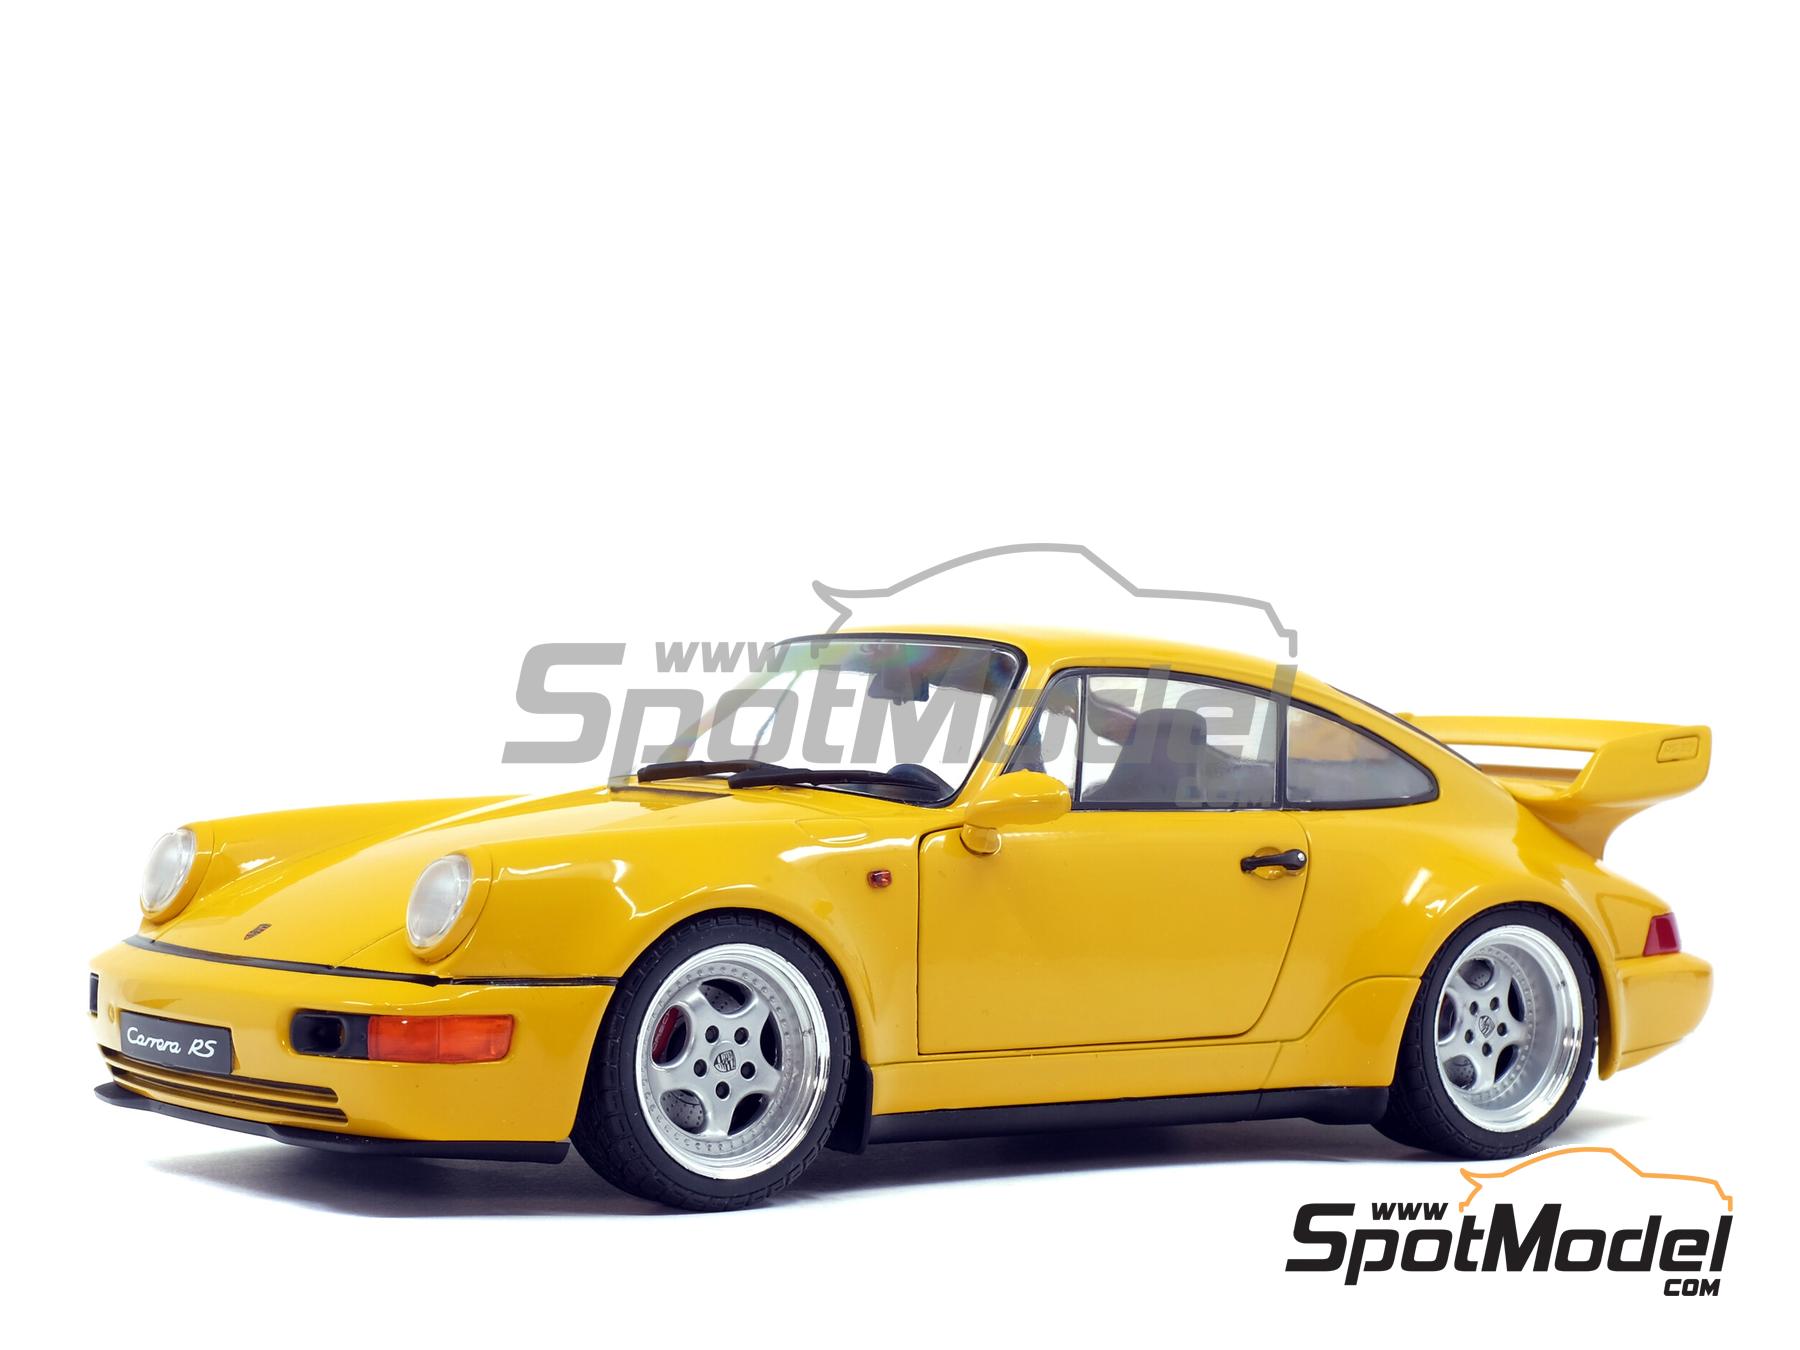 Solido S1803401: Diecast model car 1/18 scale - Porsche 911 964 